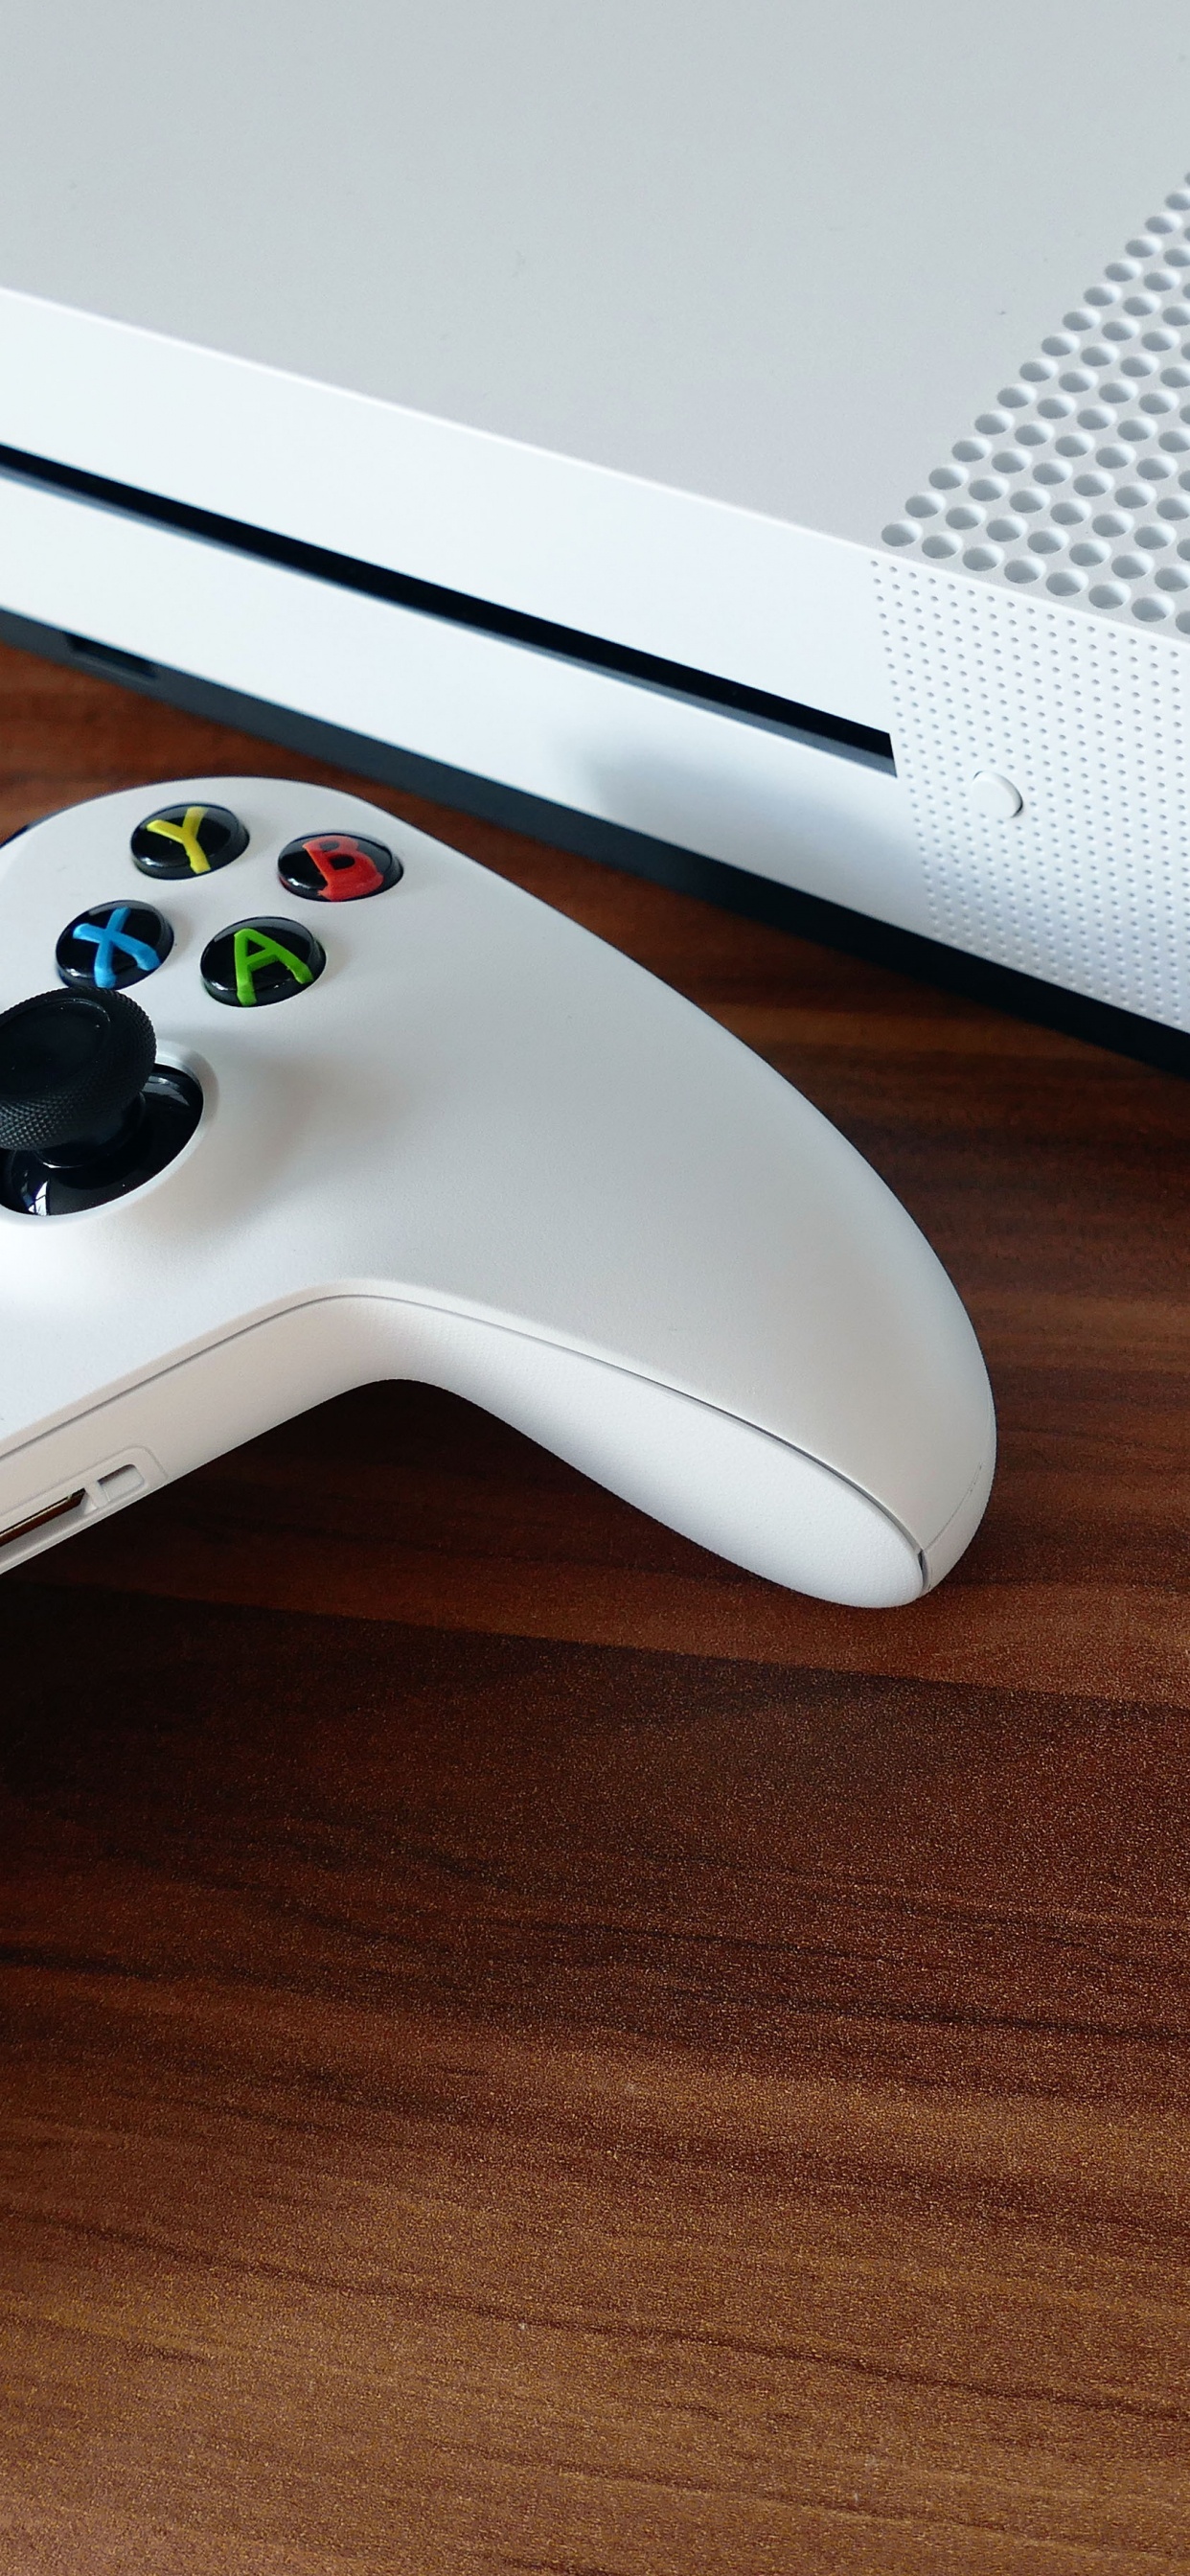 Microsoft Xbox一个S, 小工具, 电子设备, 游戏，控制器, 操纵杆 壁纸 1242x2688 允许